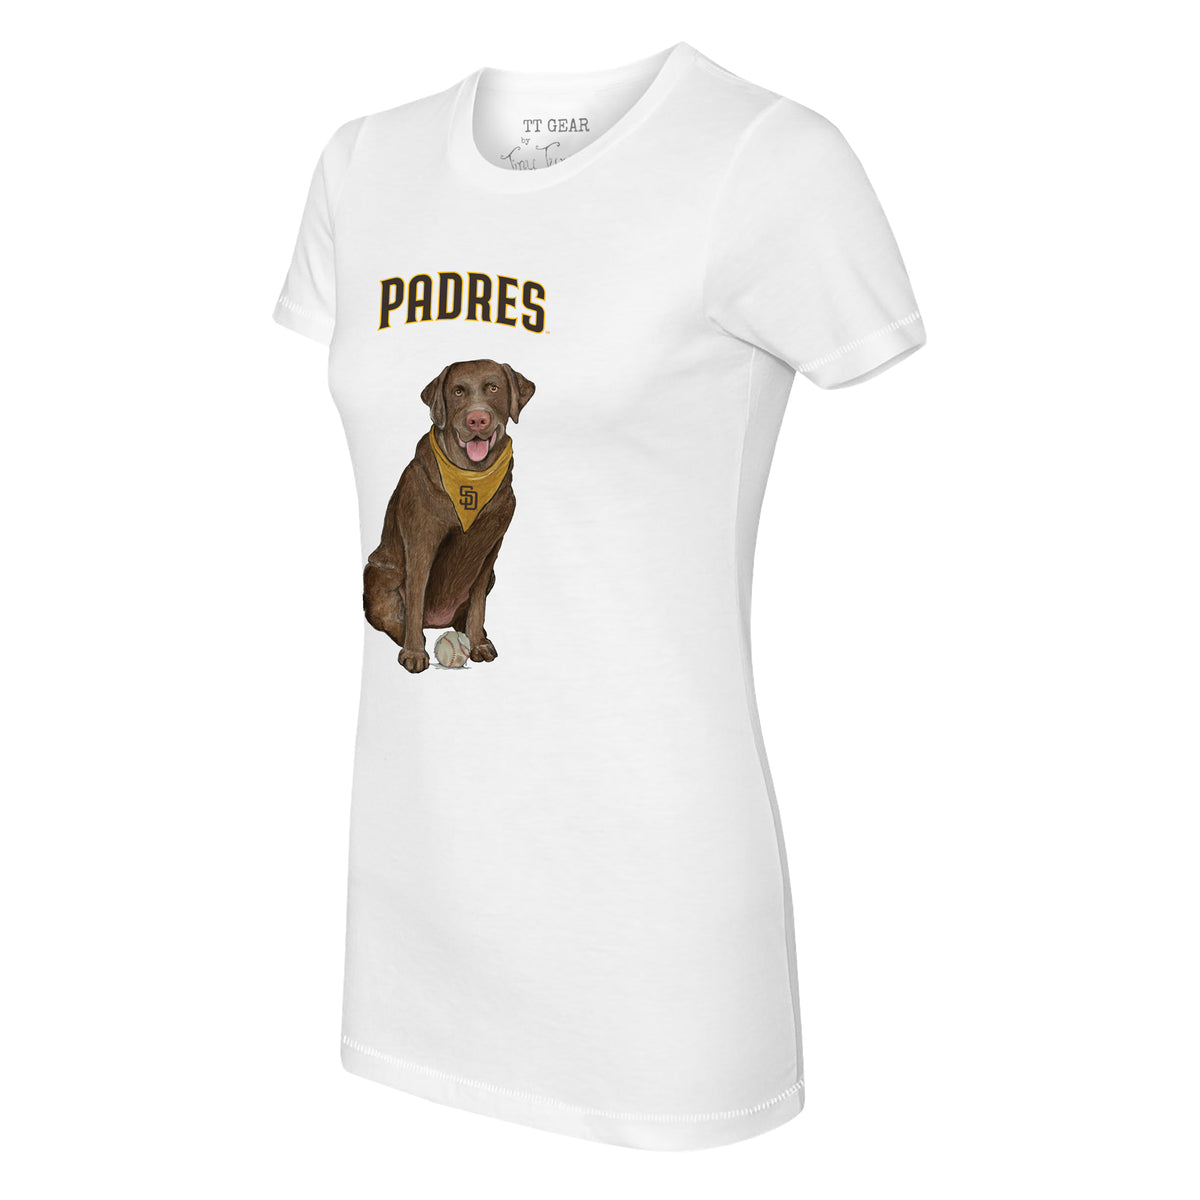 San Diego Padres Chocolate Labrador Retriever Tee Shirt